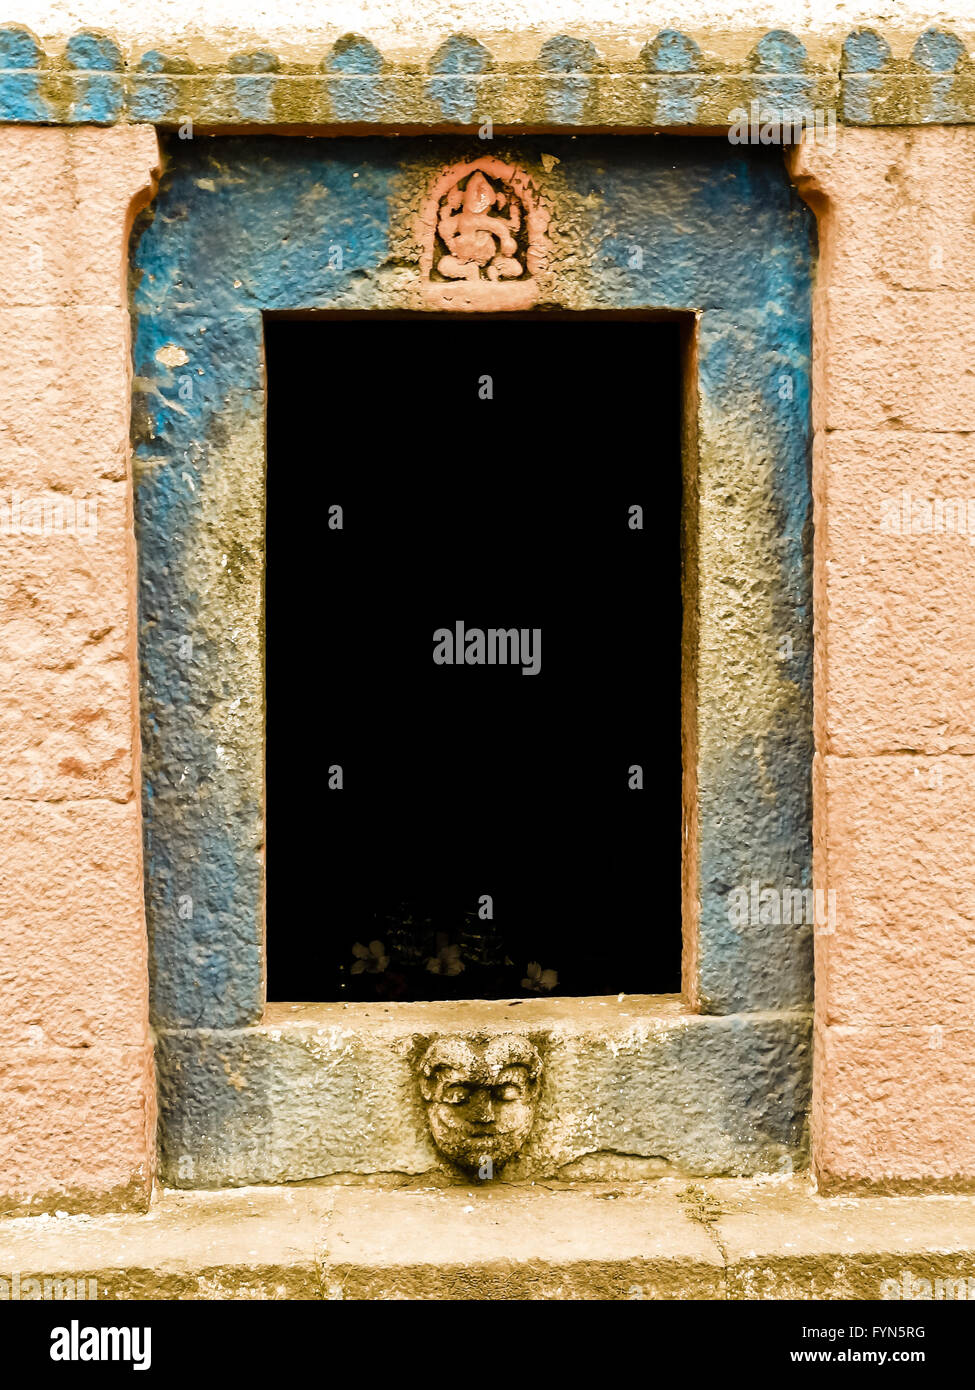 Lord Ganesha am Eingang eines Tempels Stockfoto